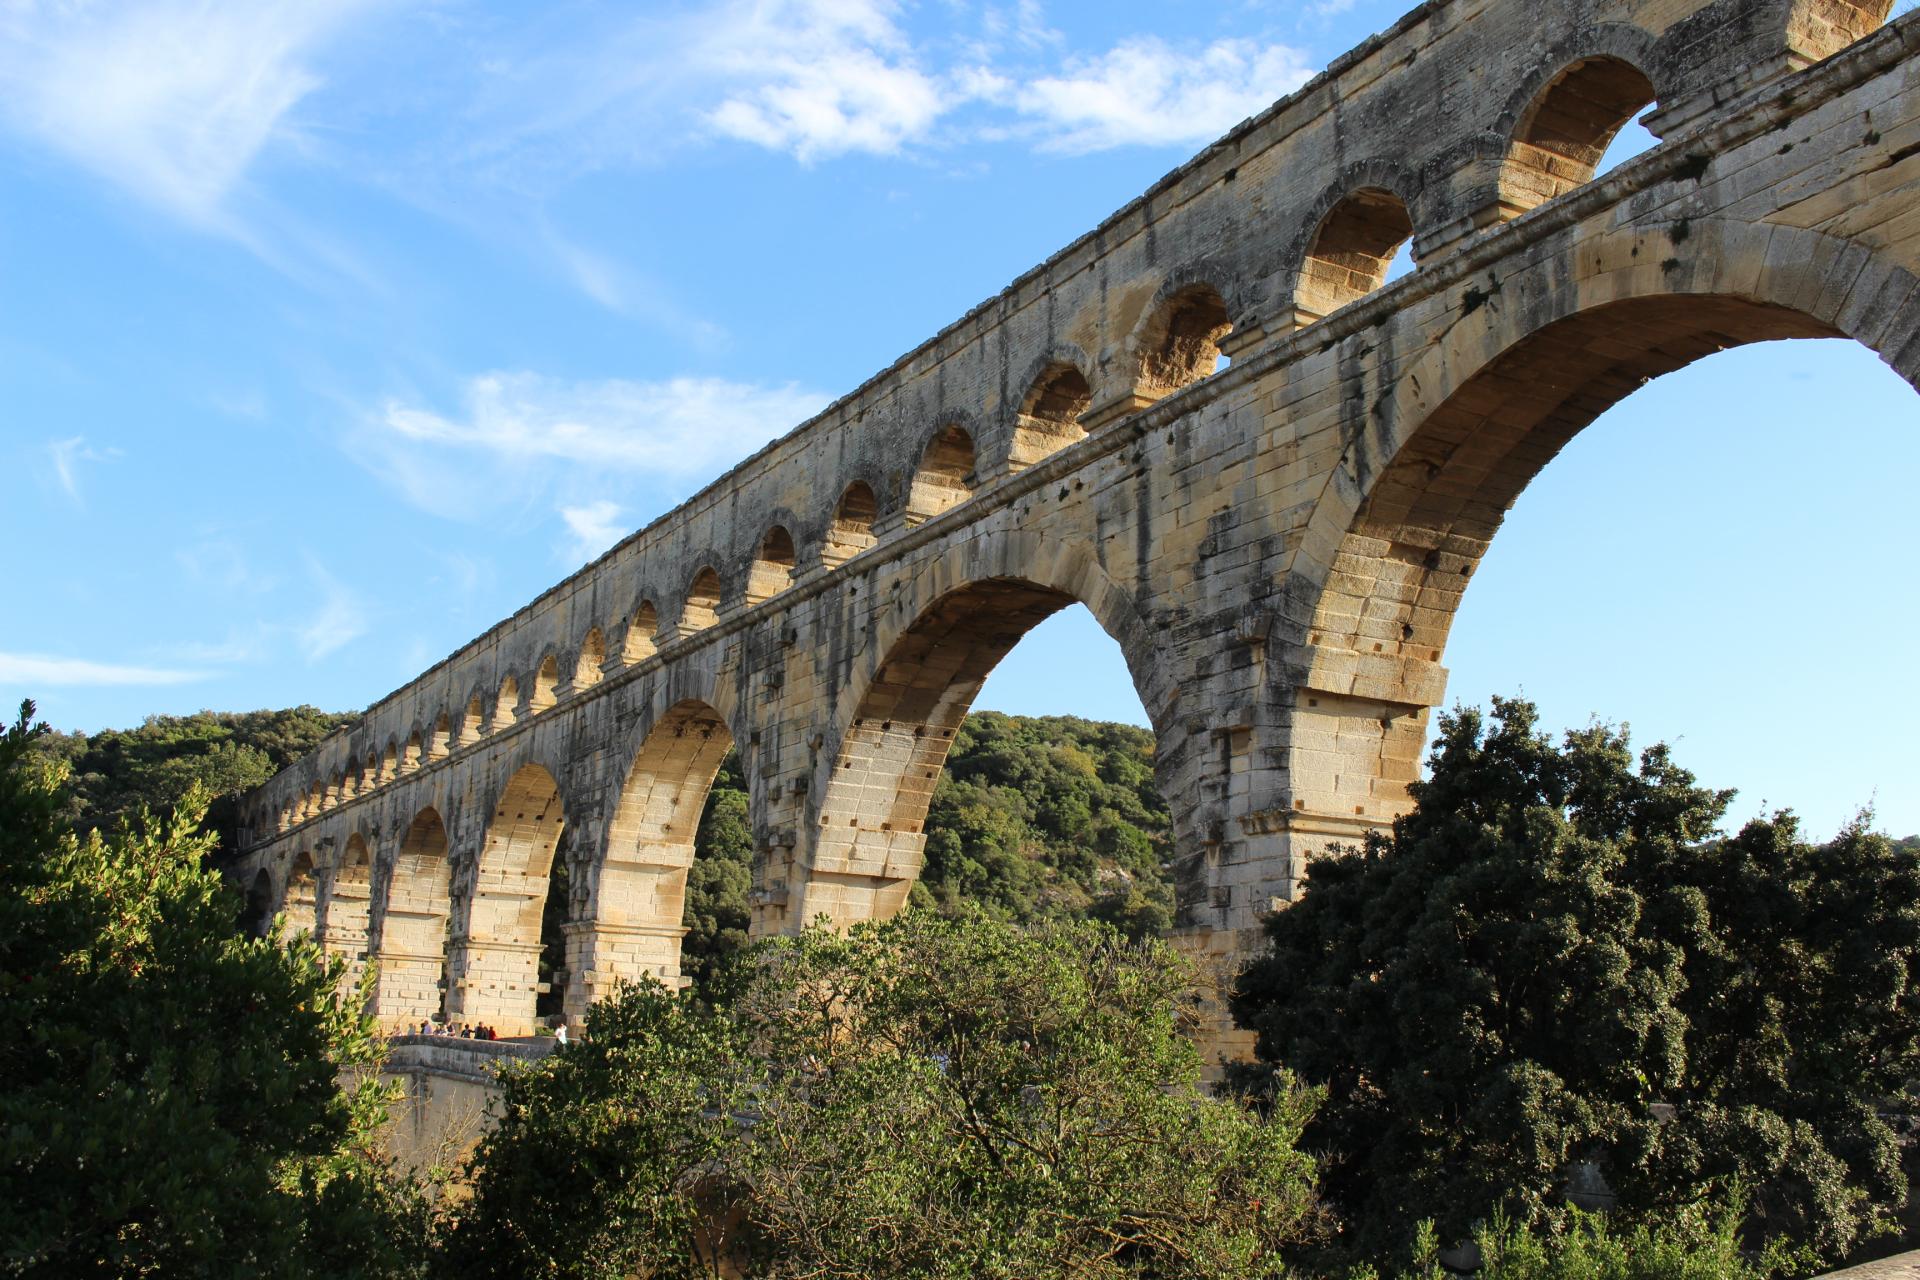 The Bridge of Gard